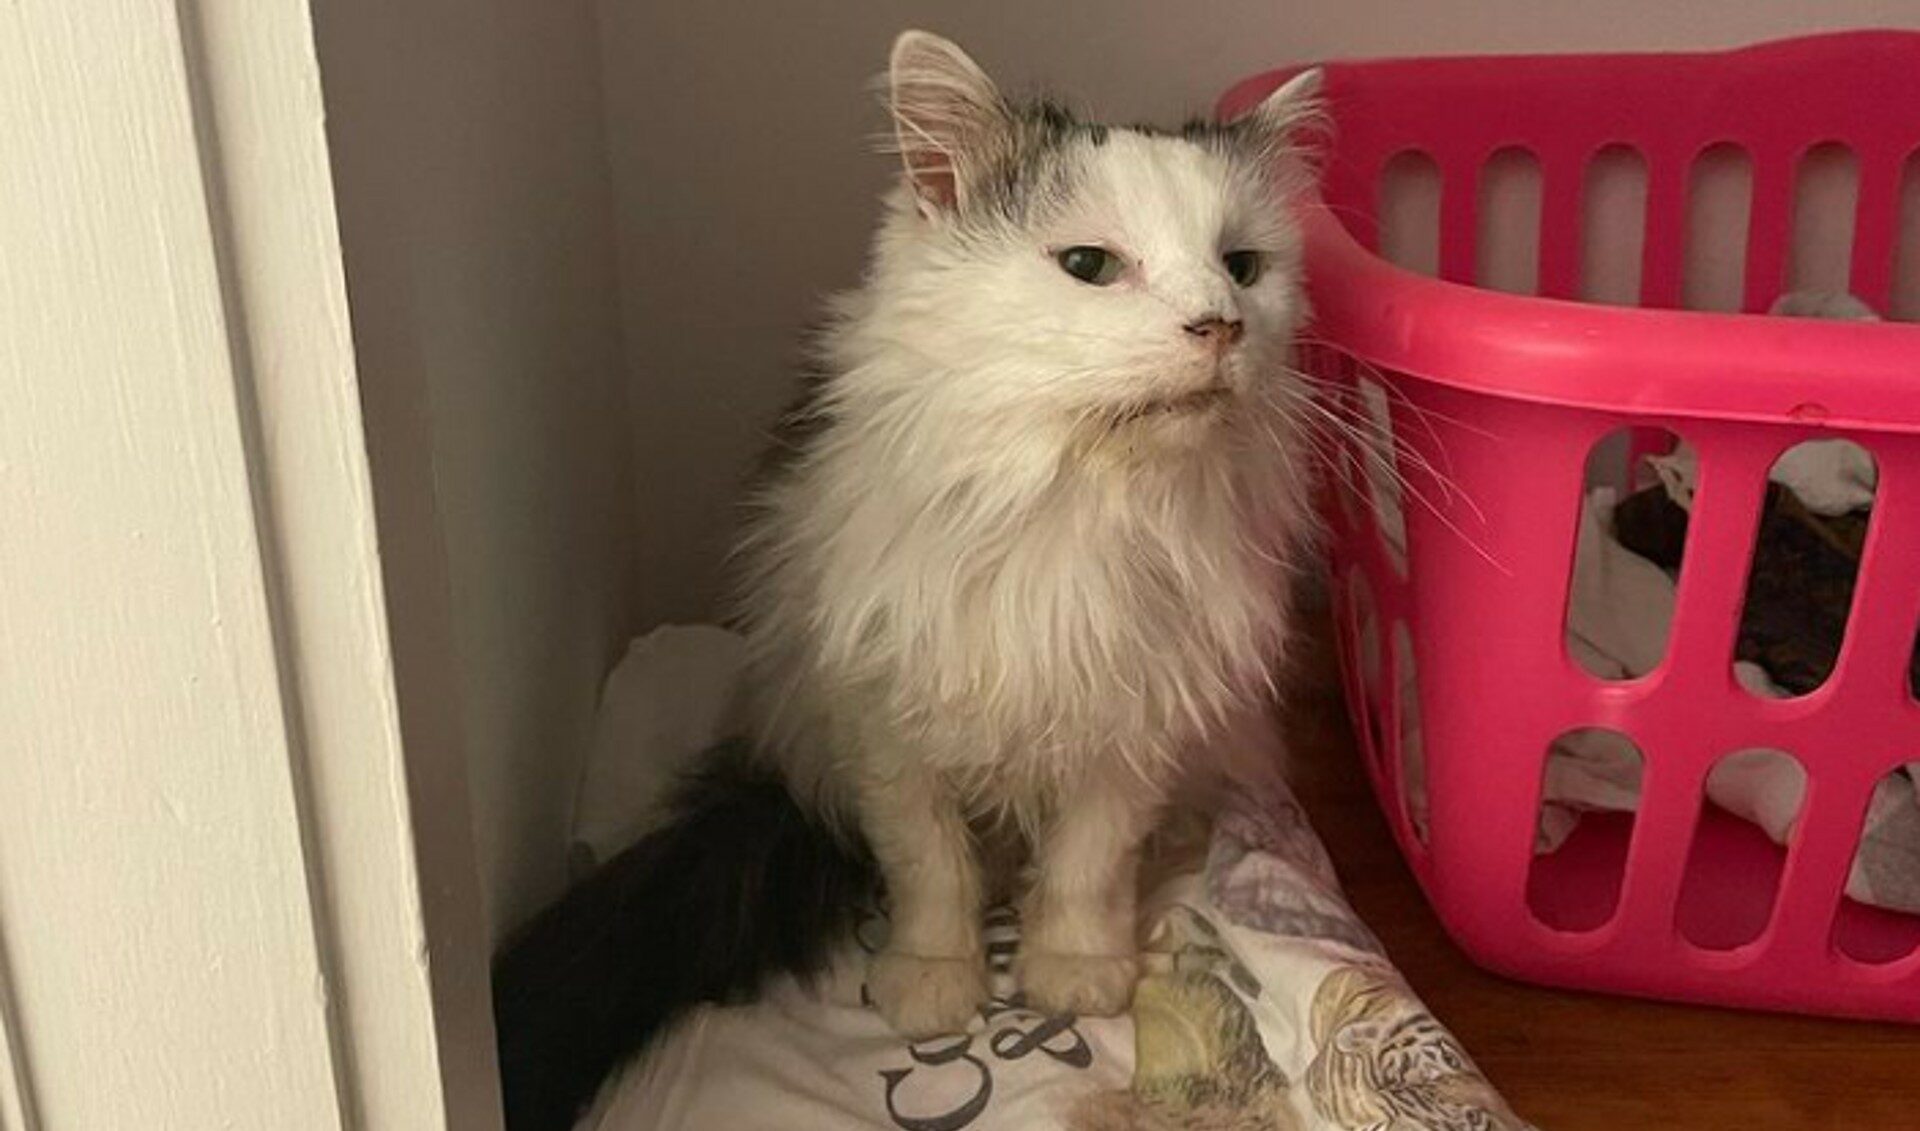 TikTok mourns beloved cat Pot Roast: “She was done fighting”